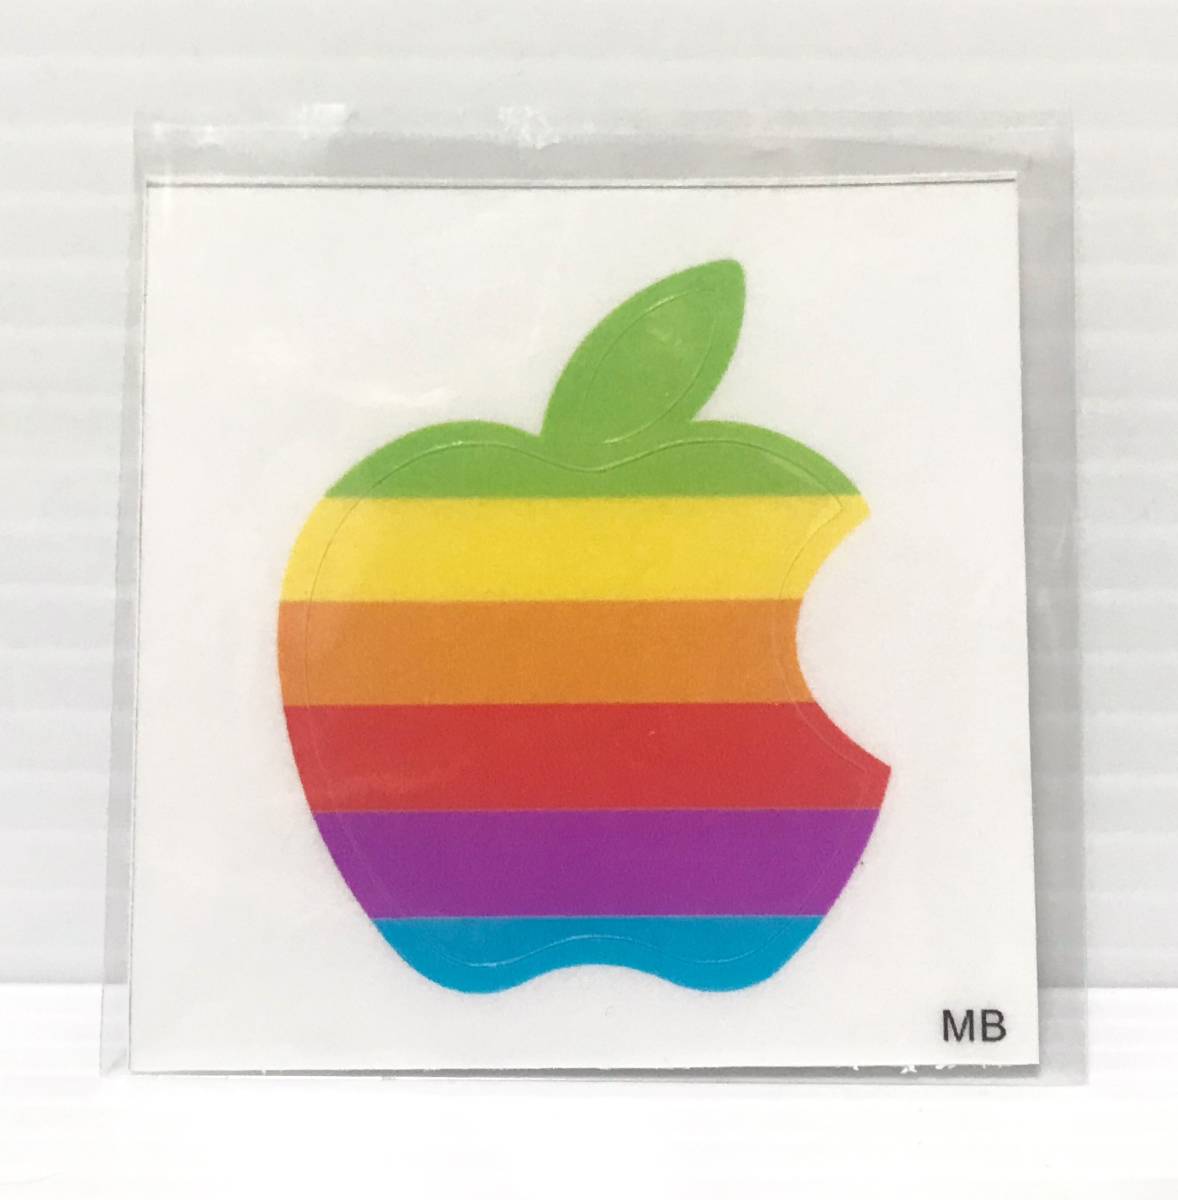 Macbook Air Macbook Pro 用 アップル レインボーステッカー 透明シール レトロアップル Apple Macintosh ロゴ Product Details Yahoo Auctions Japan Proxy Bidding And Shopping Service From Japan